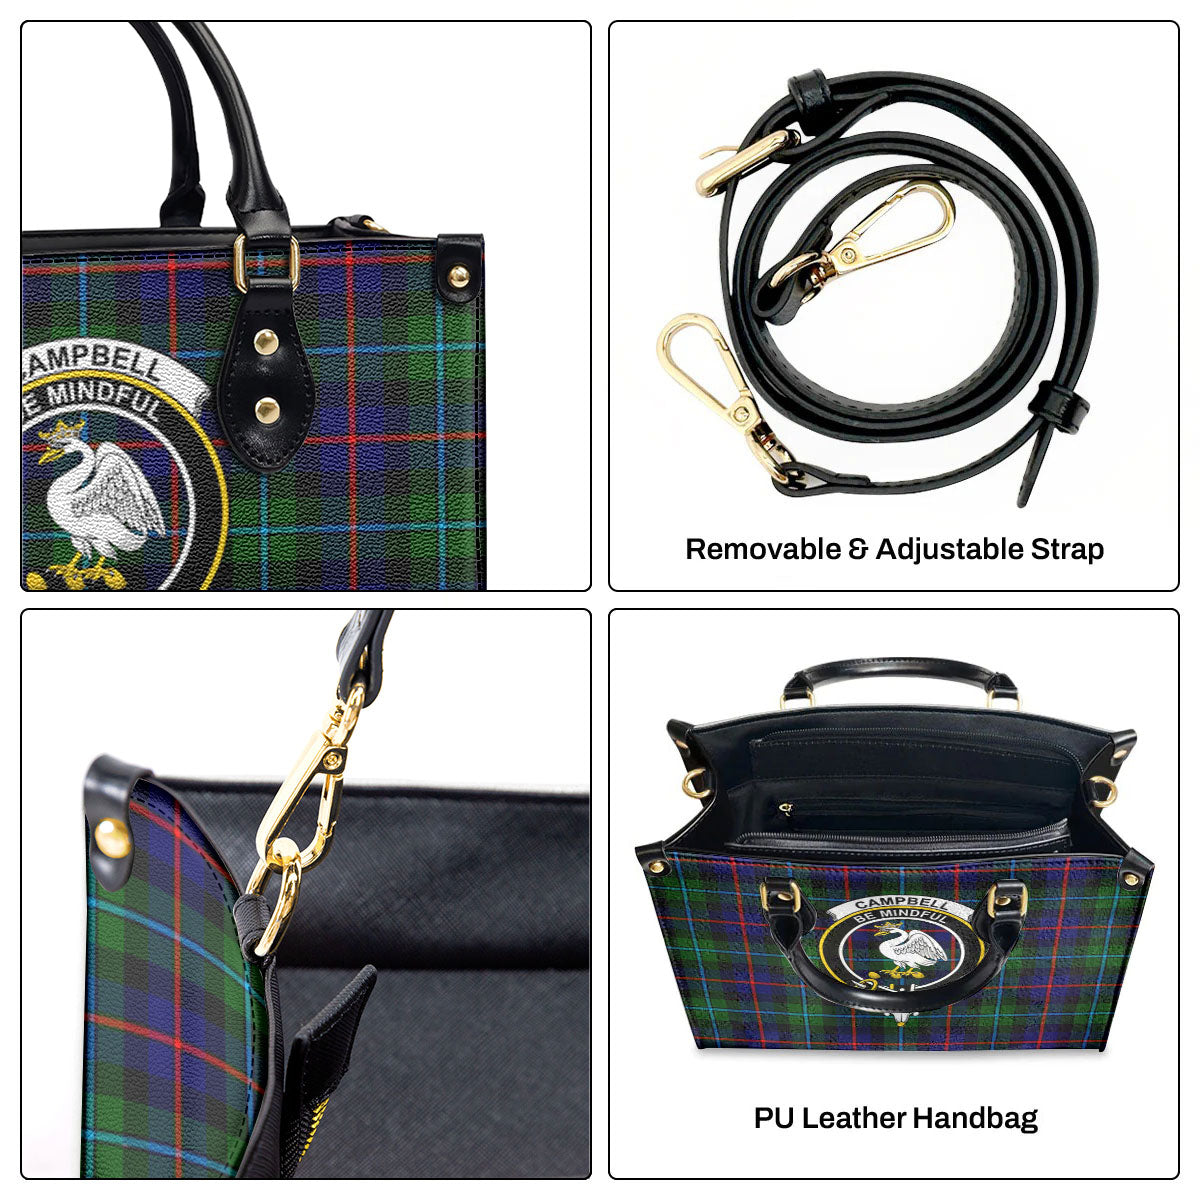 Campbell of Cawdor Modern Tartan Crest Leather Handbag